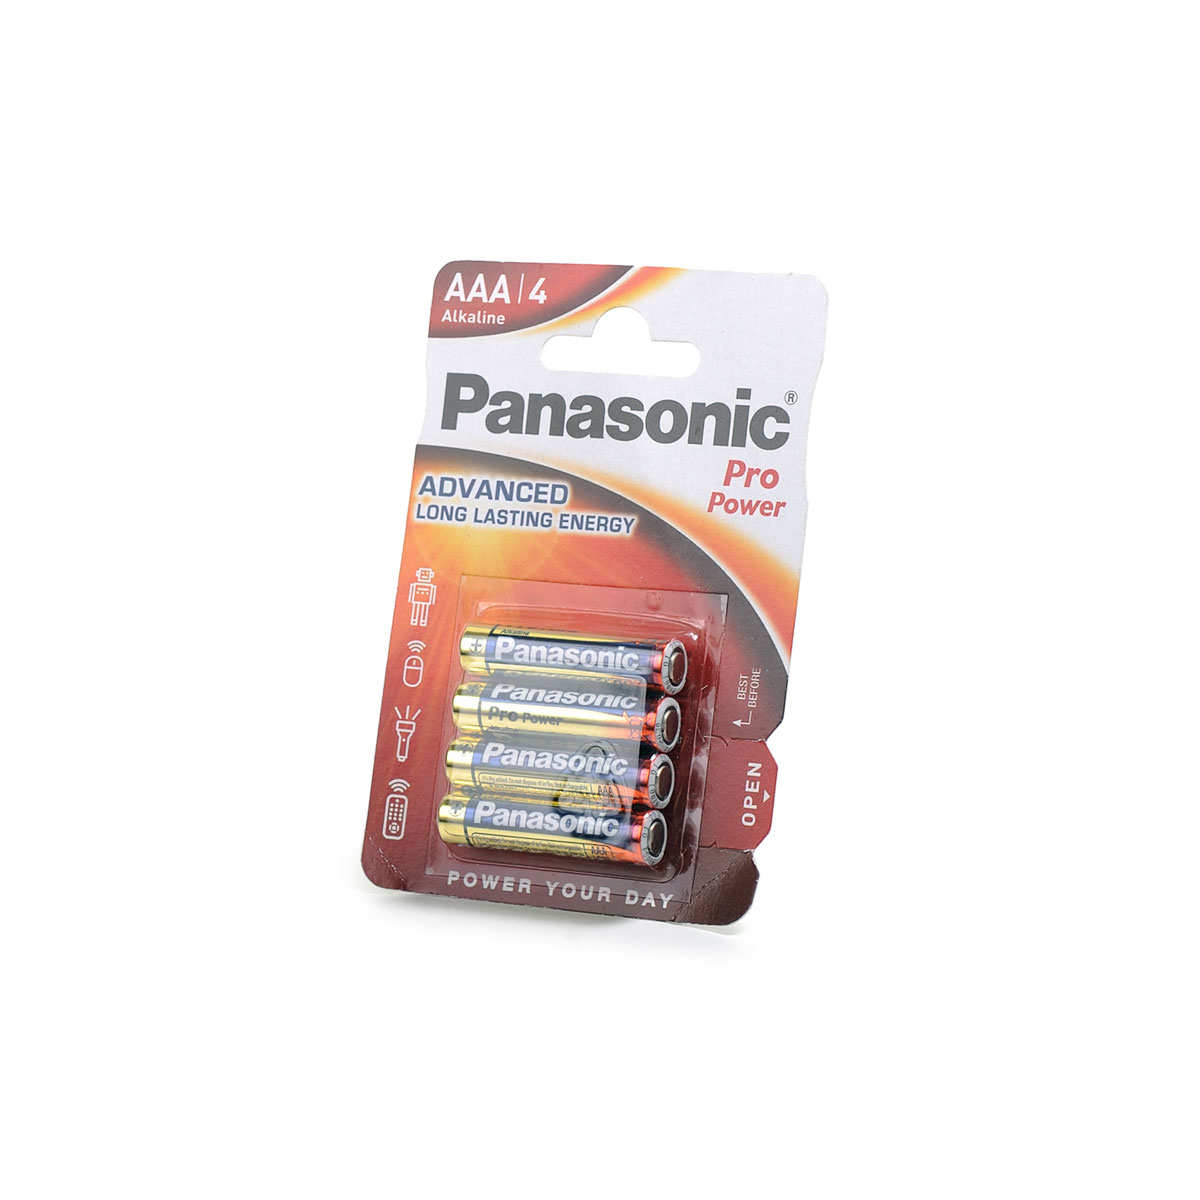 Billede af Panasonic Alkaline AAA Batterier